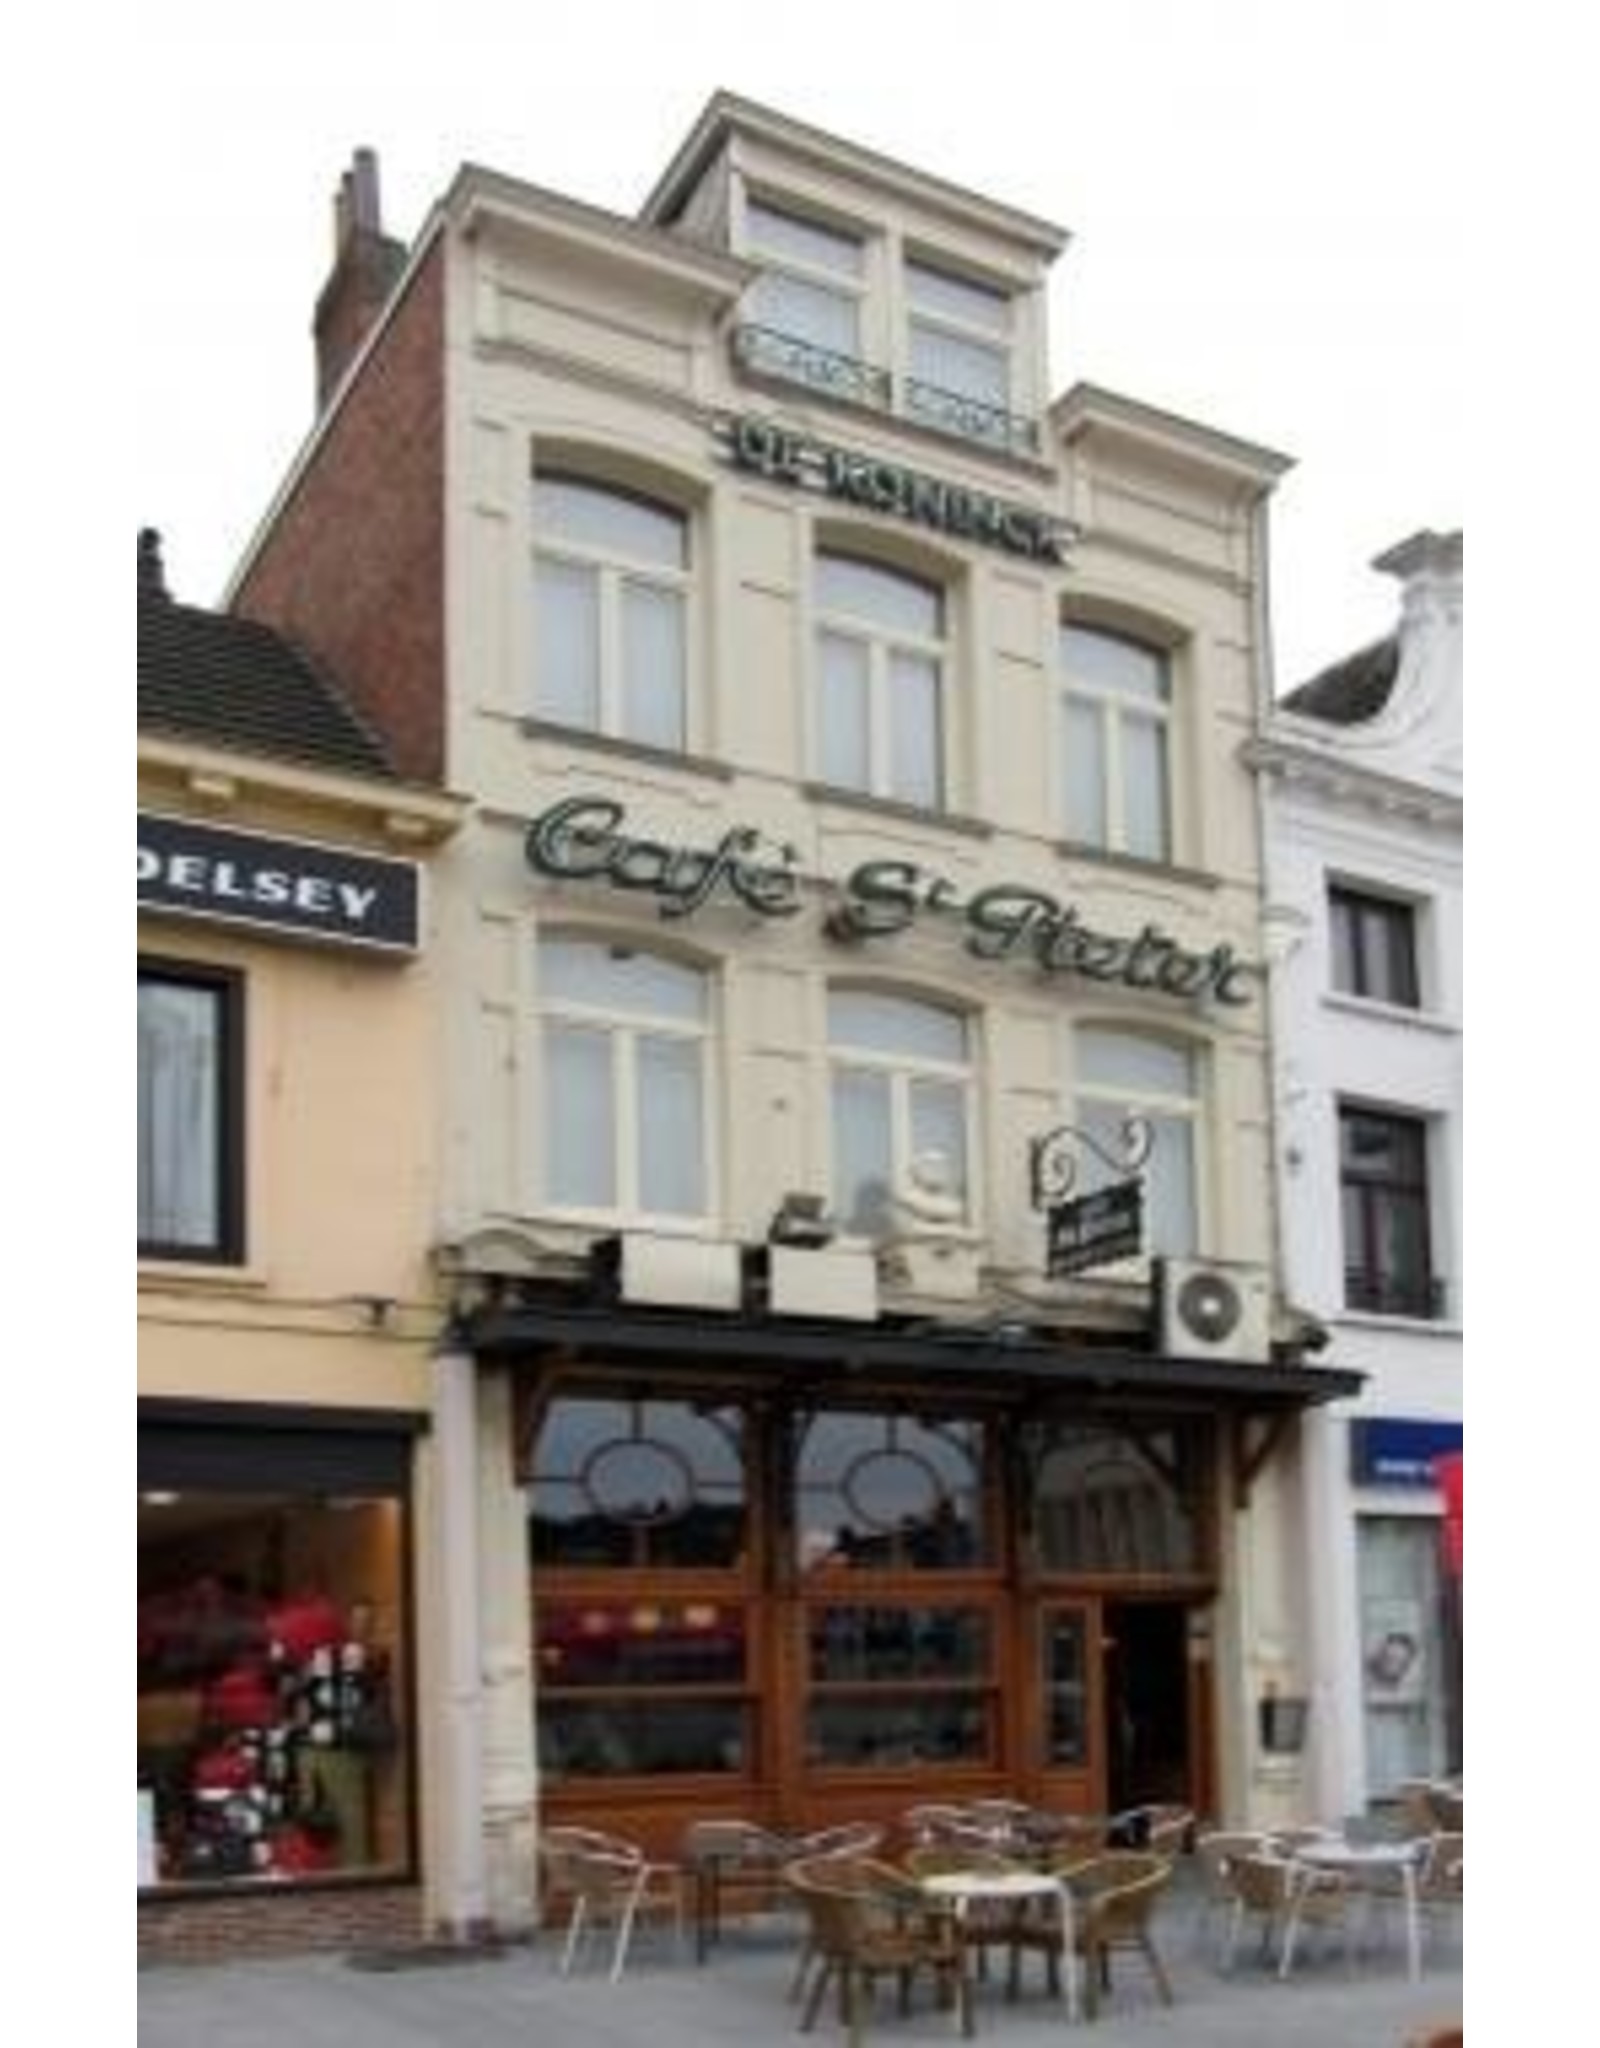 Apero box - Café Sint-Pieter